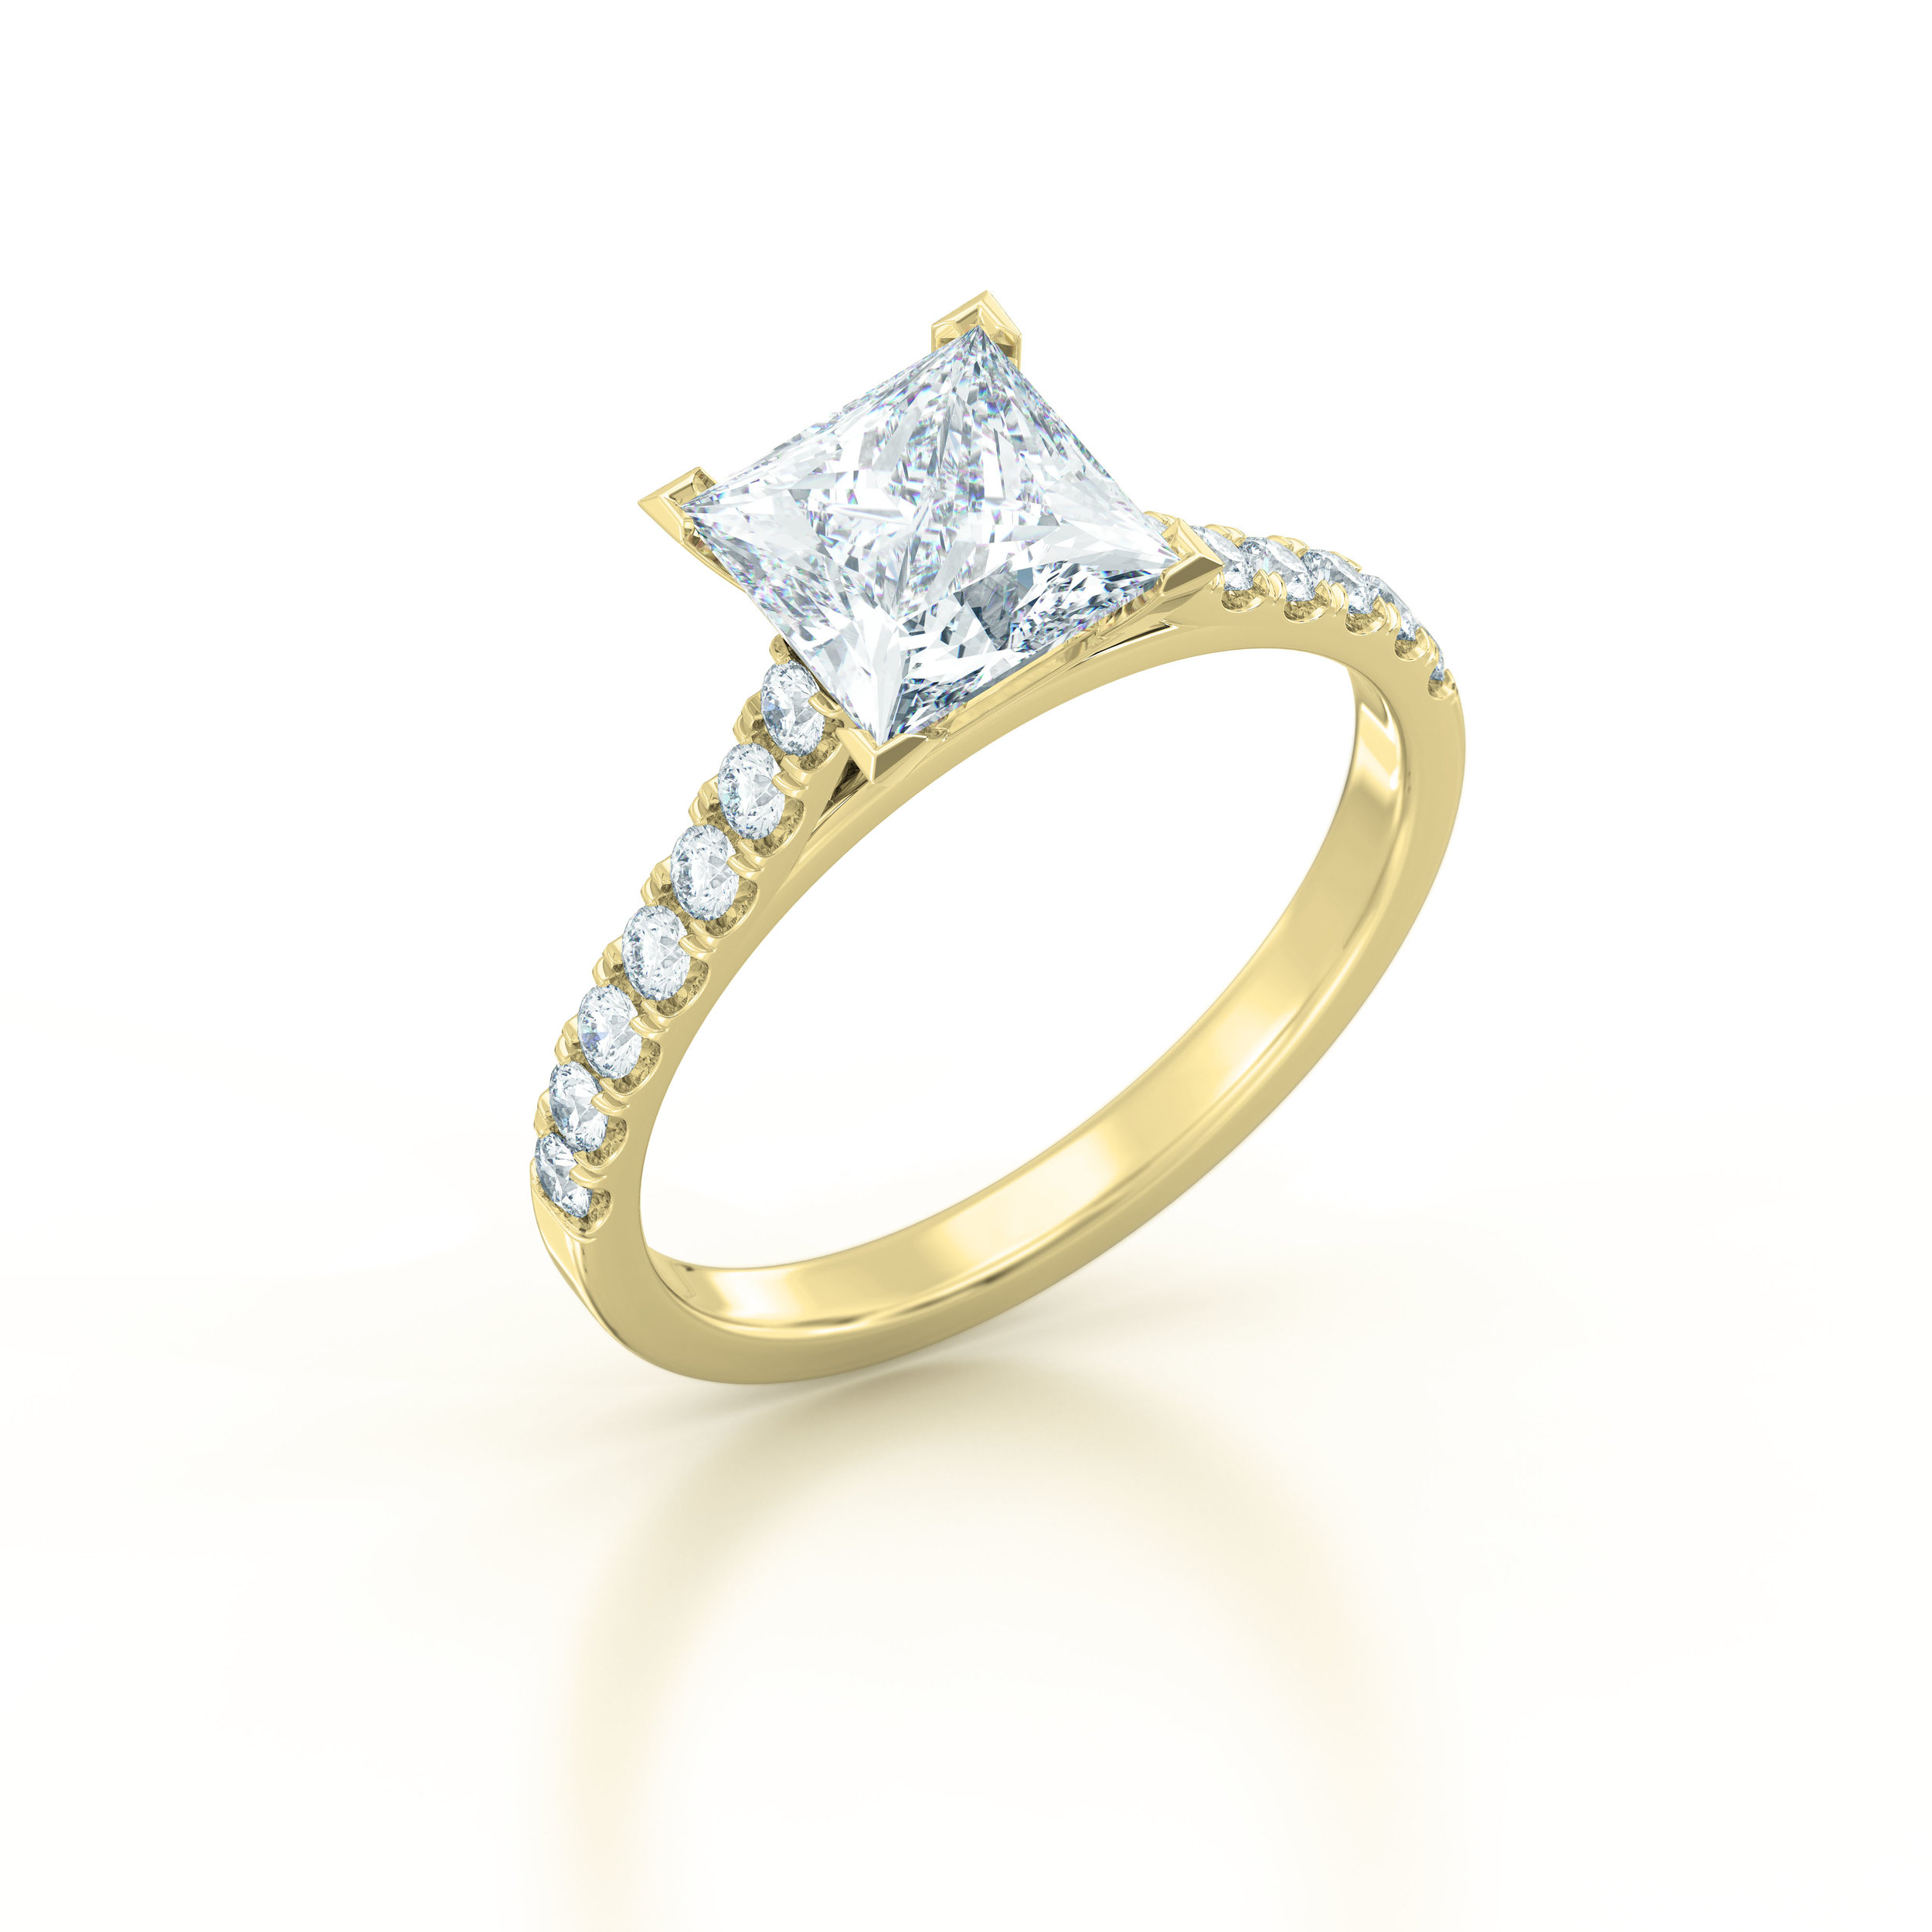 Princess cut diamond shoulder engagement ring